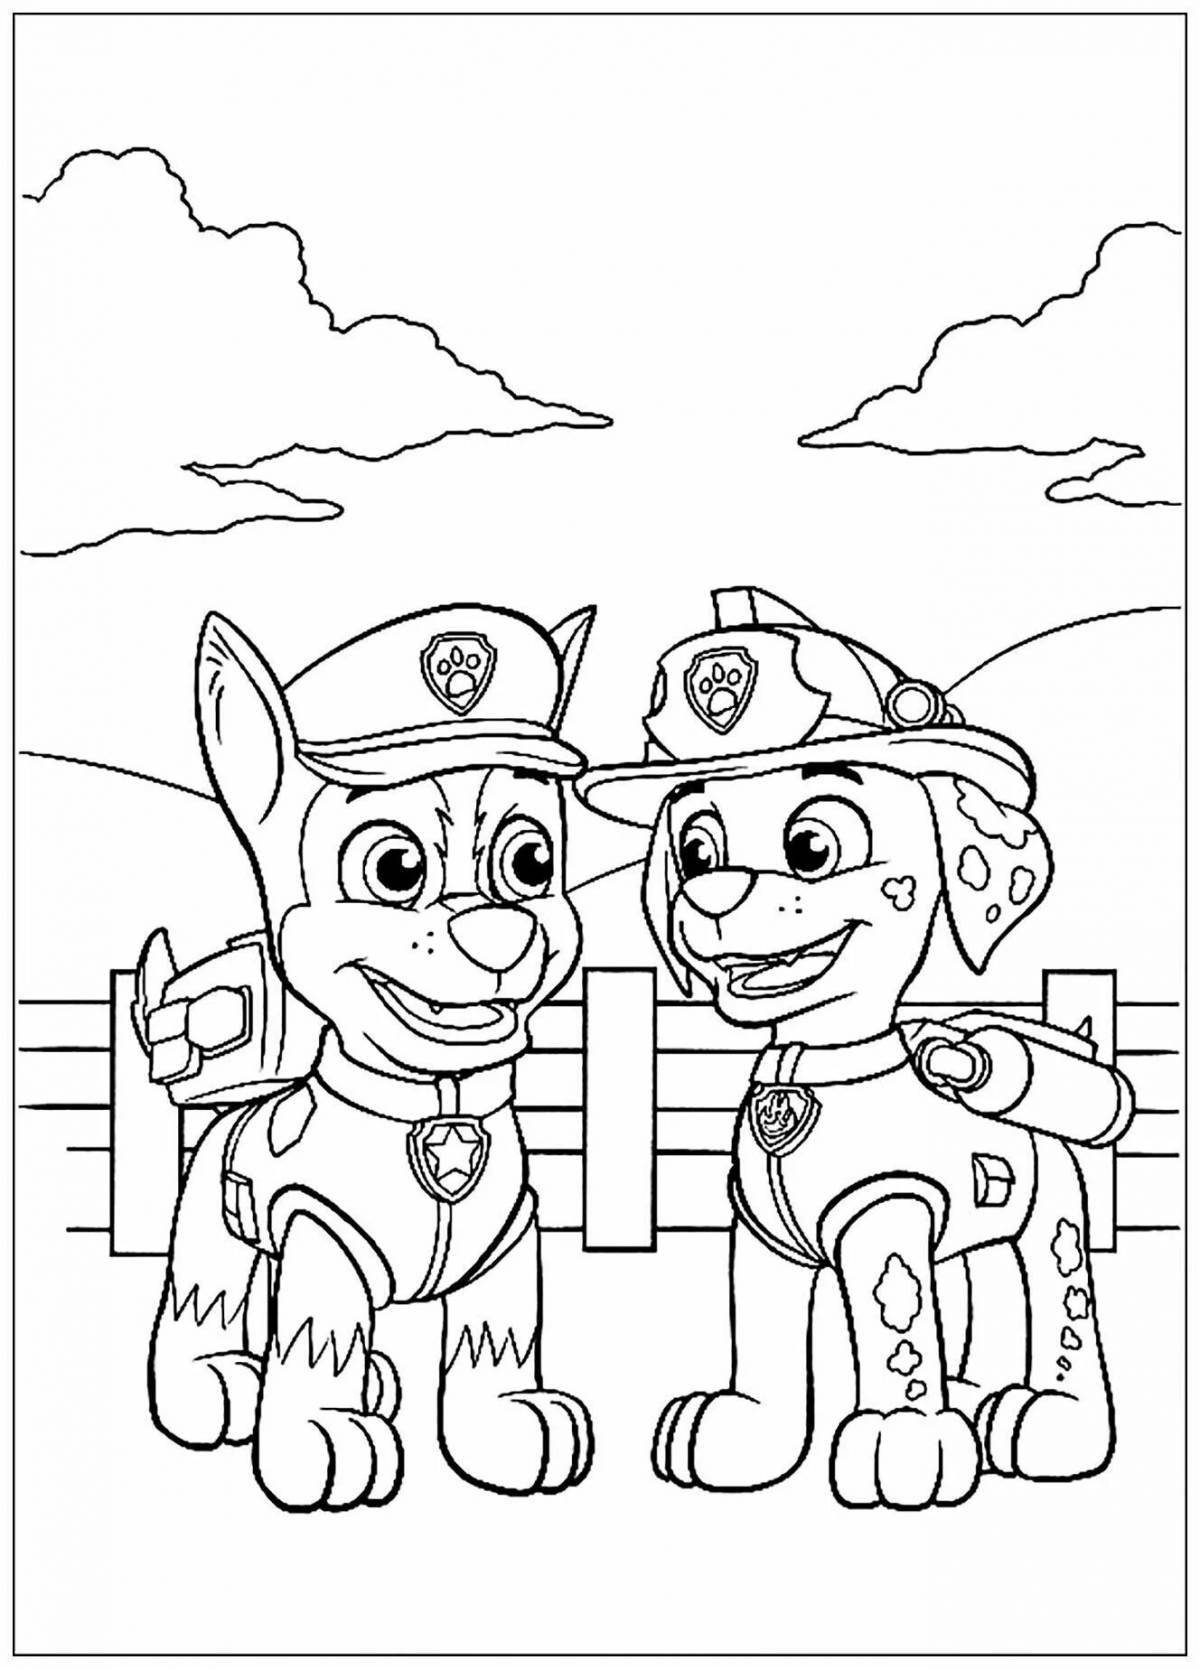 Playful coloring paw patrol cartoon